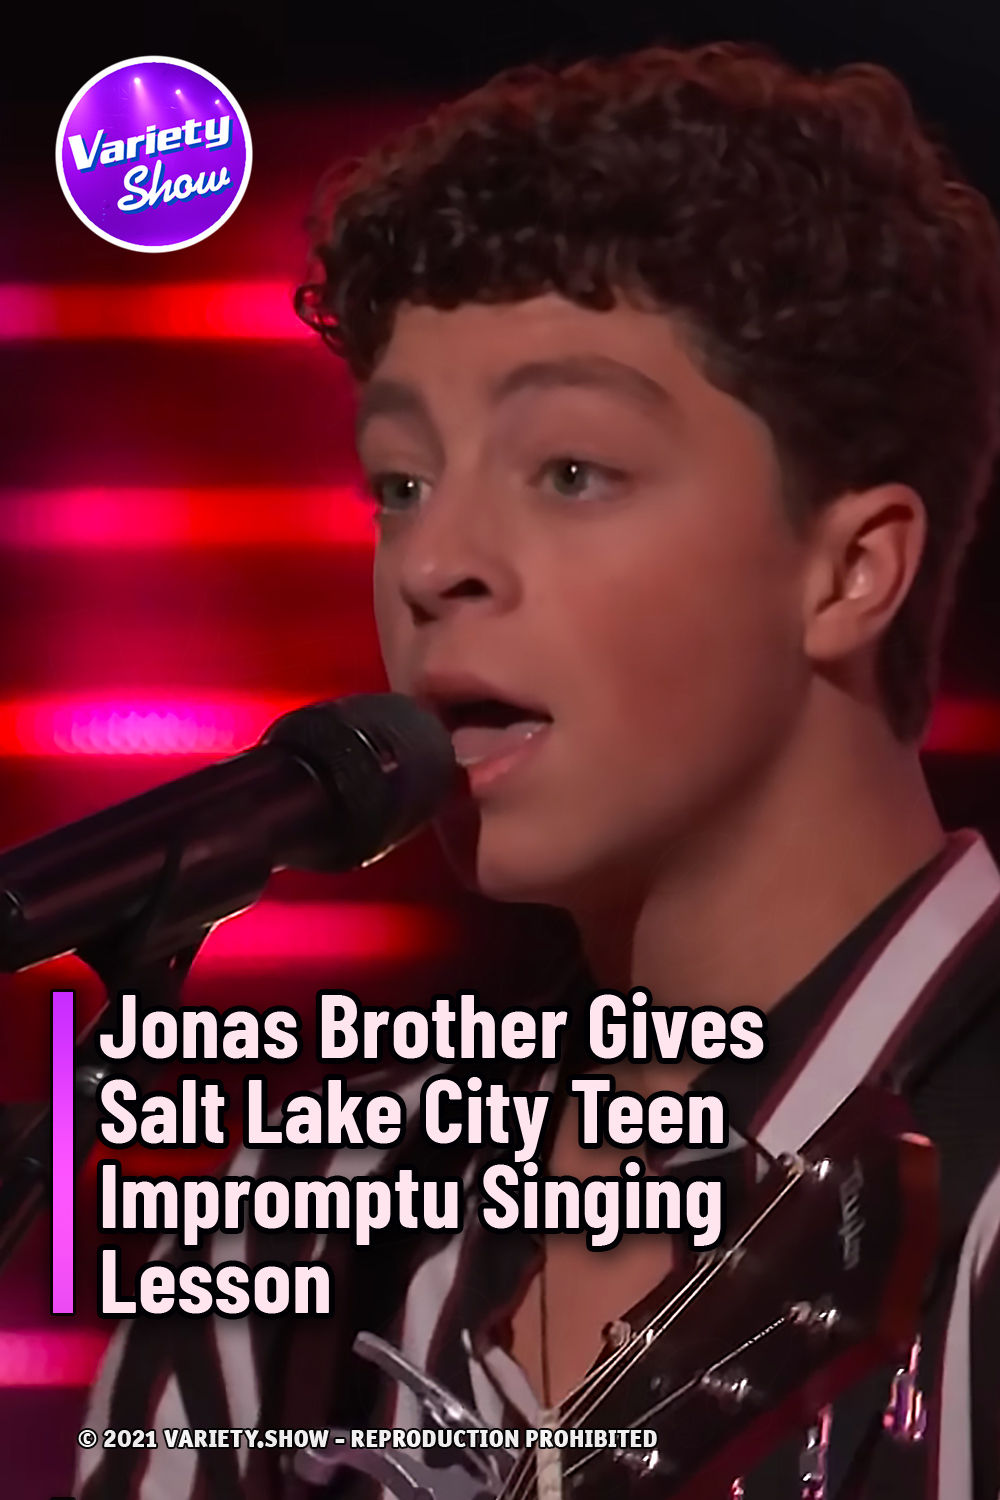 Jonas Brother Gives Salt Lake City Teen Impromptu Singing Lesson